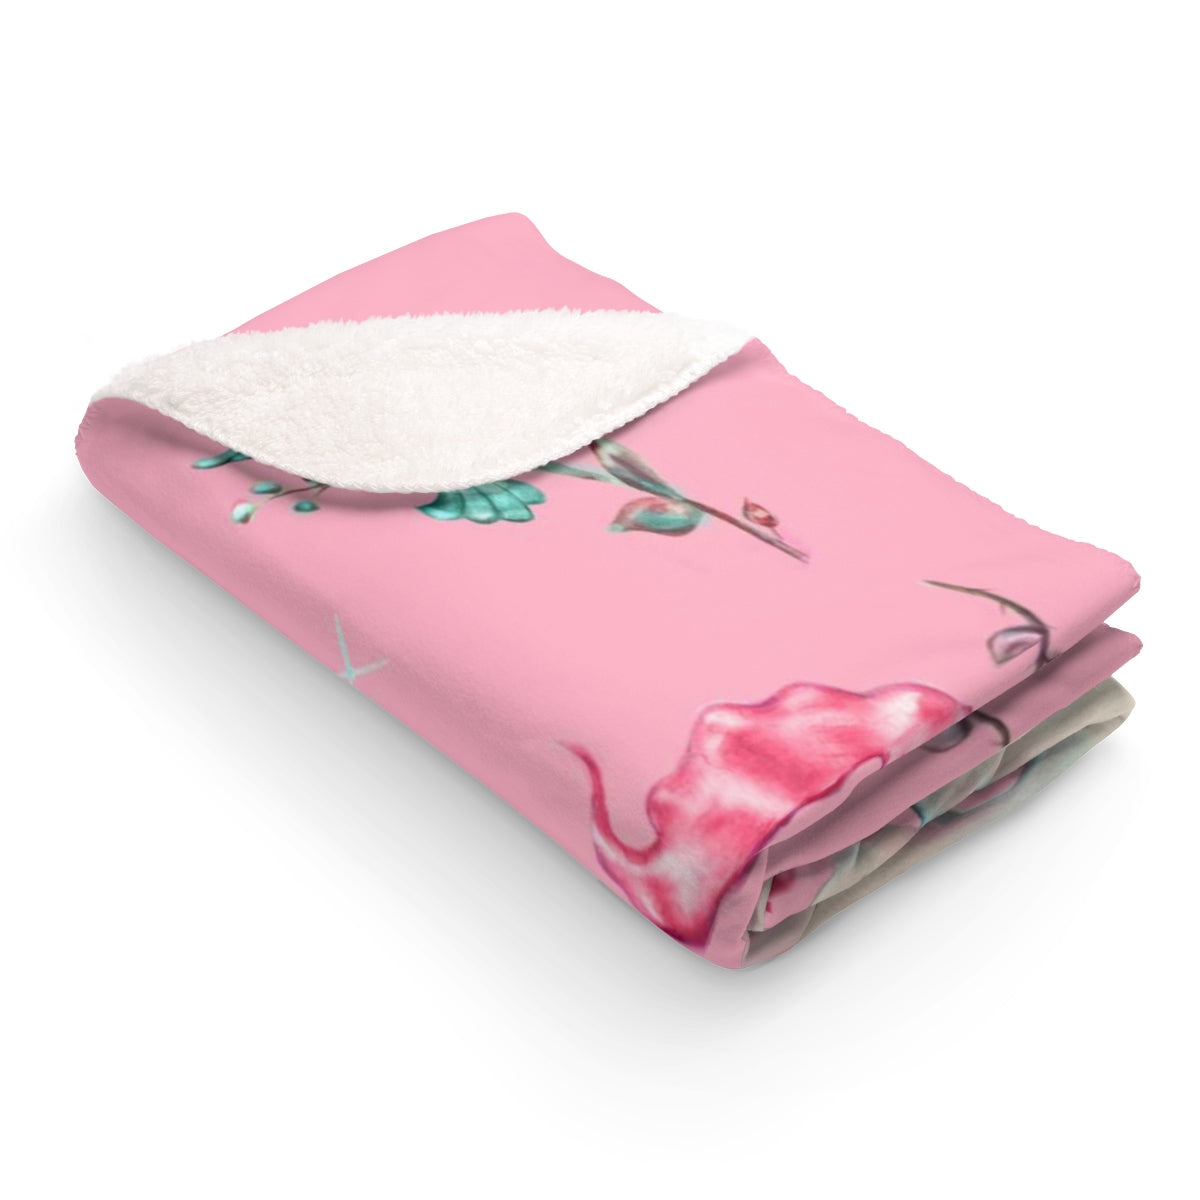 Unicorns and Roses on Pink • Sherpa Fleece Blanket